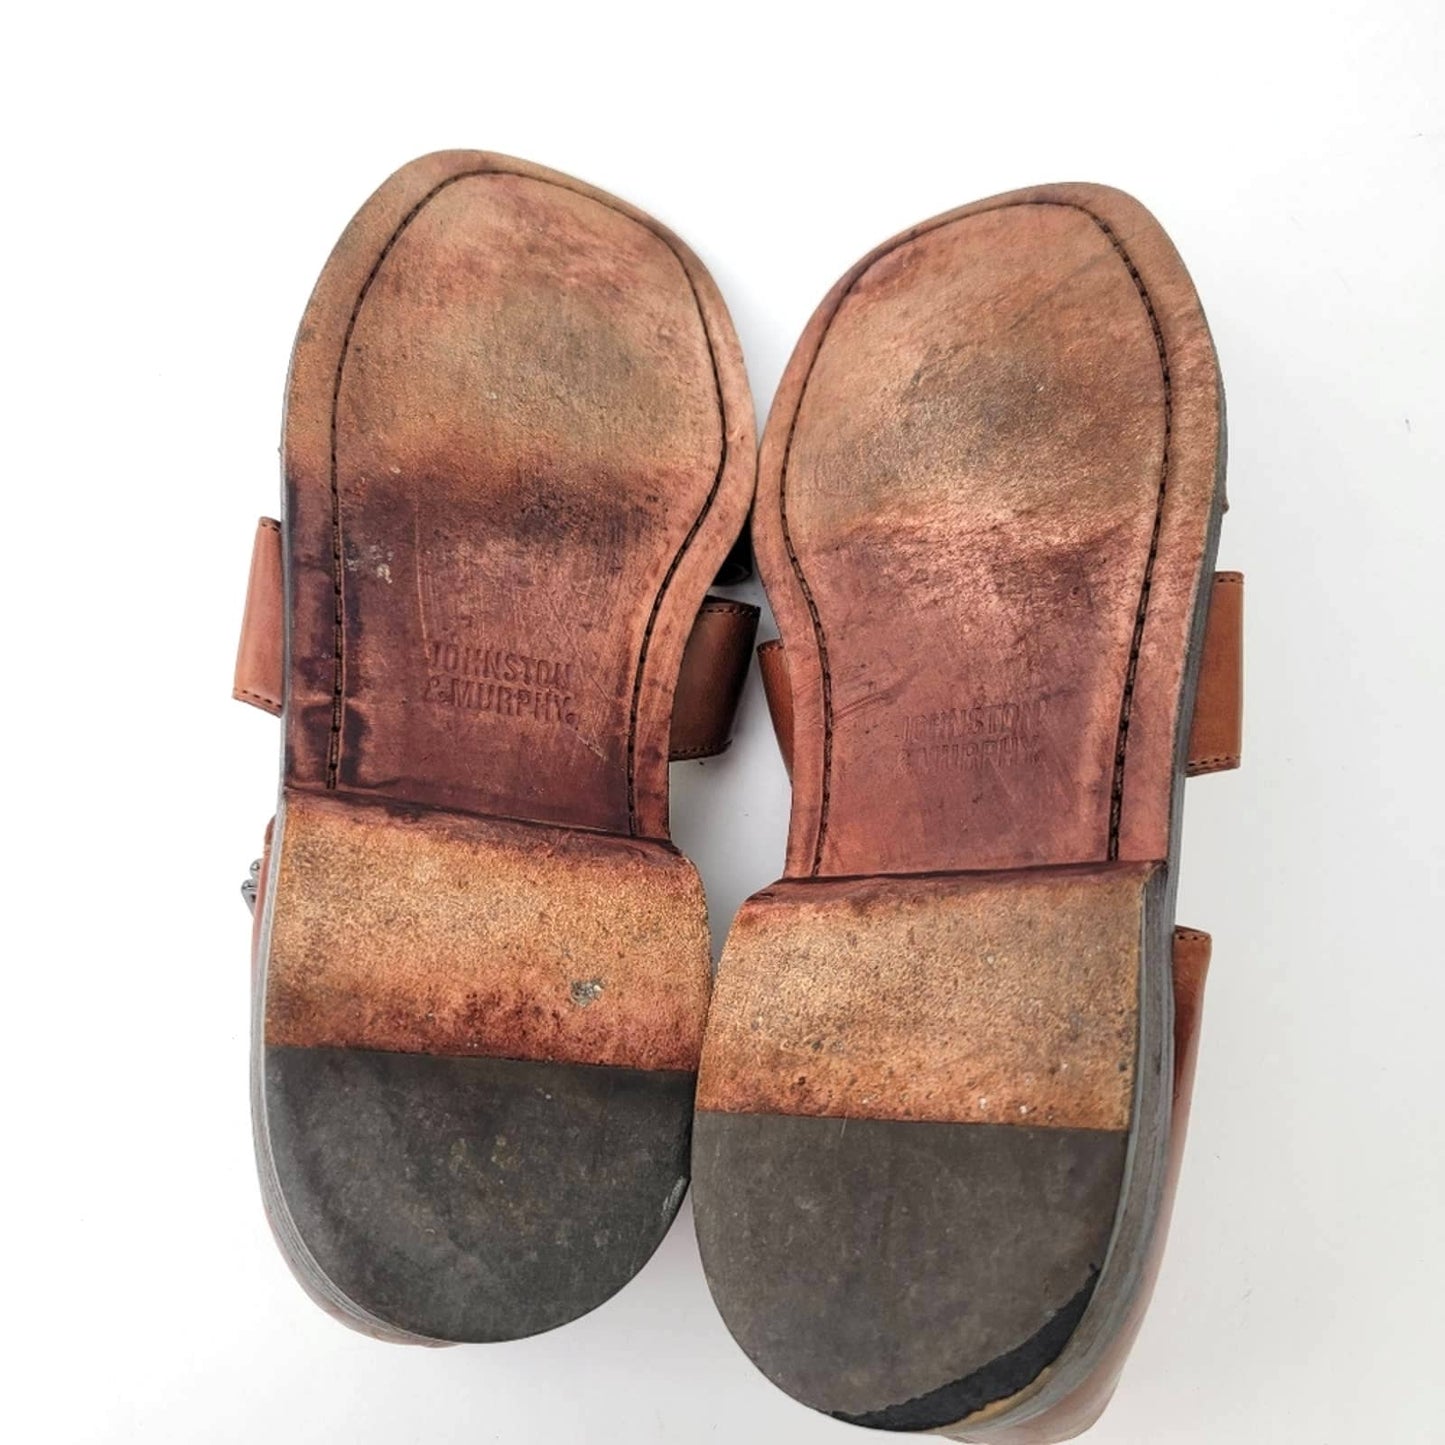 Johnston & Murphy Domani Leather Huarache Fisherman Sandals - 8.5